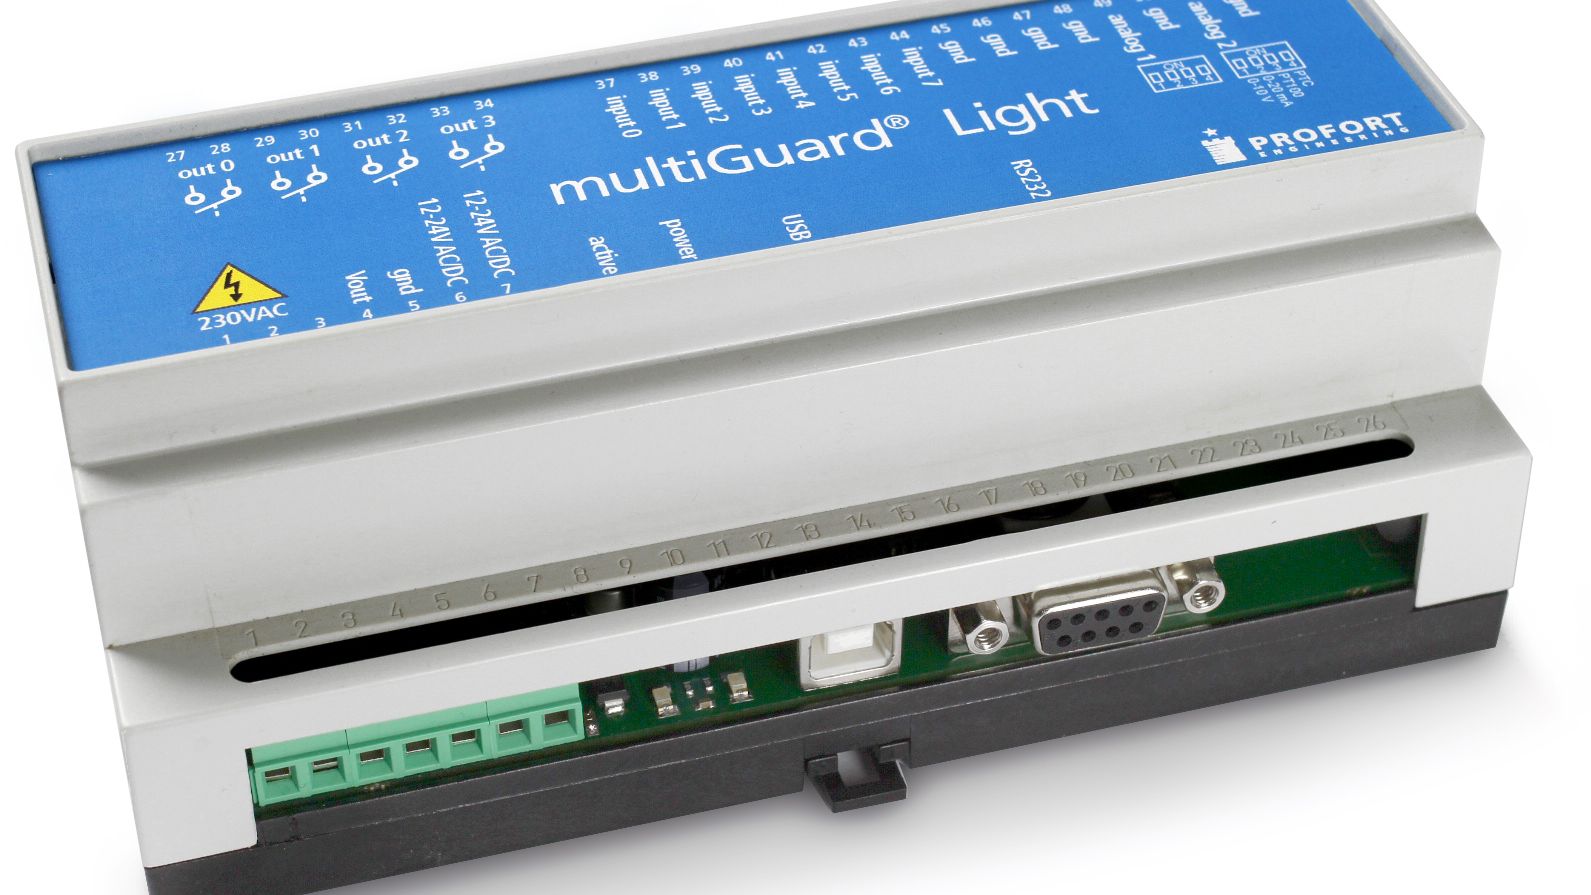 Bevæger sig ikke Fysik Blot Multiguard Light har numera USB-port | Induo AB